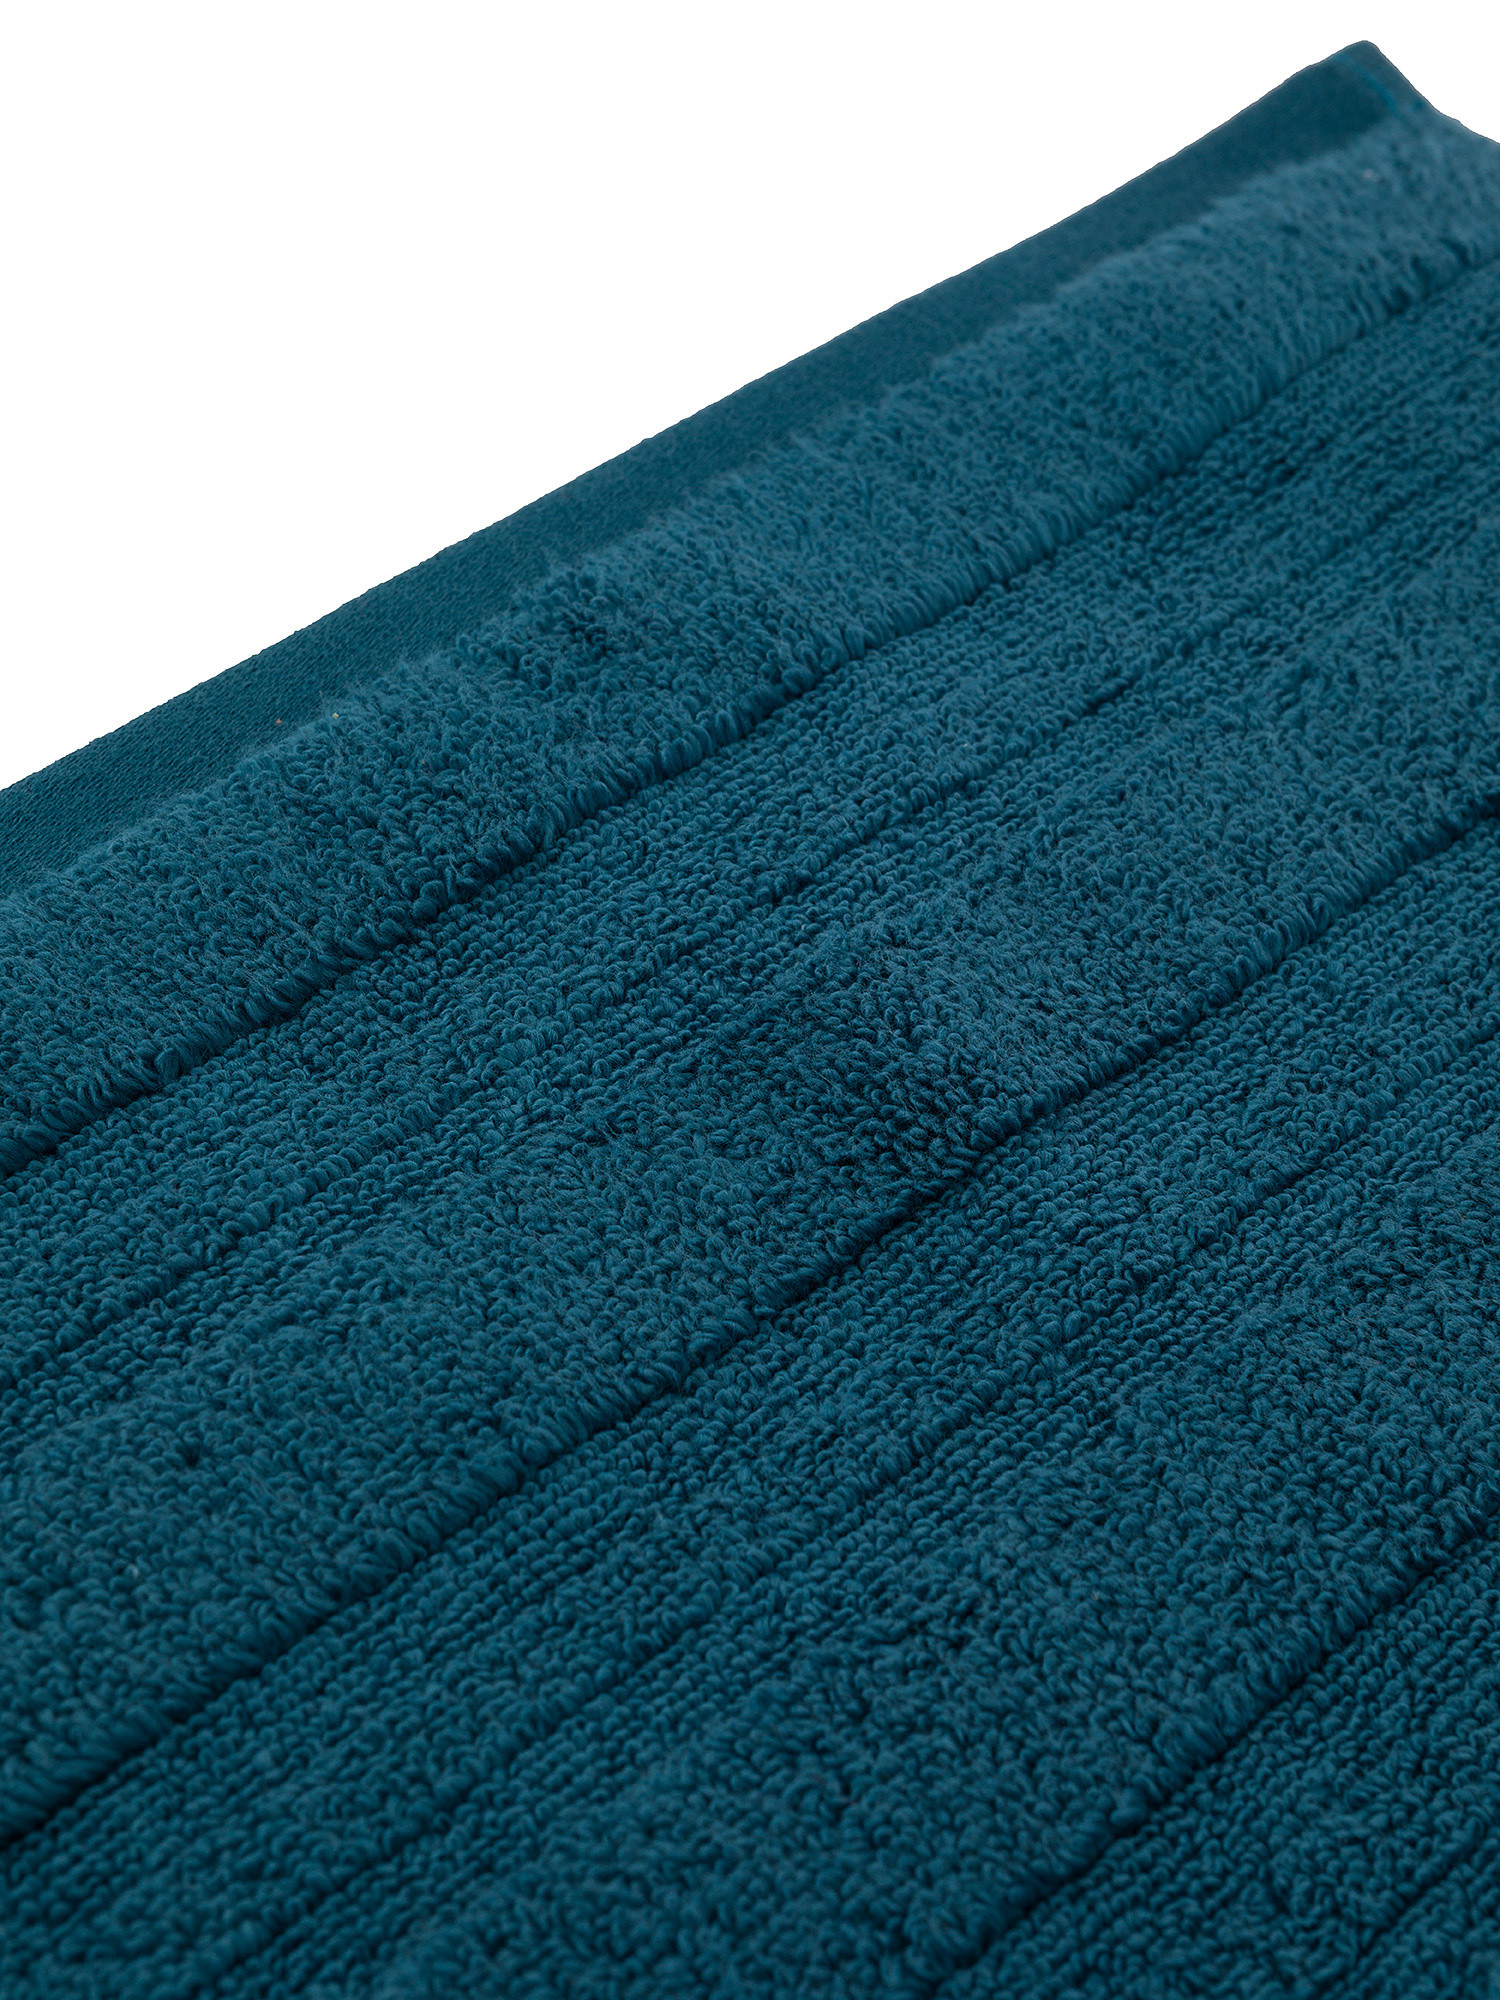 Zefiro Gold solid color 100% cotton towel, Blue, large image number 2